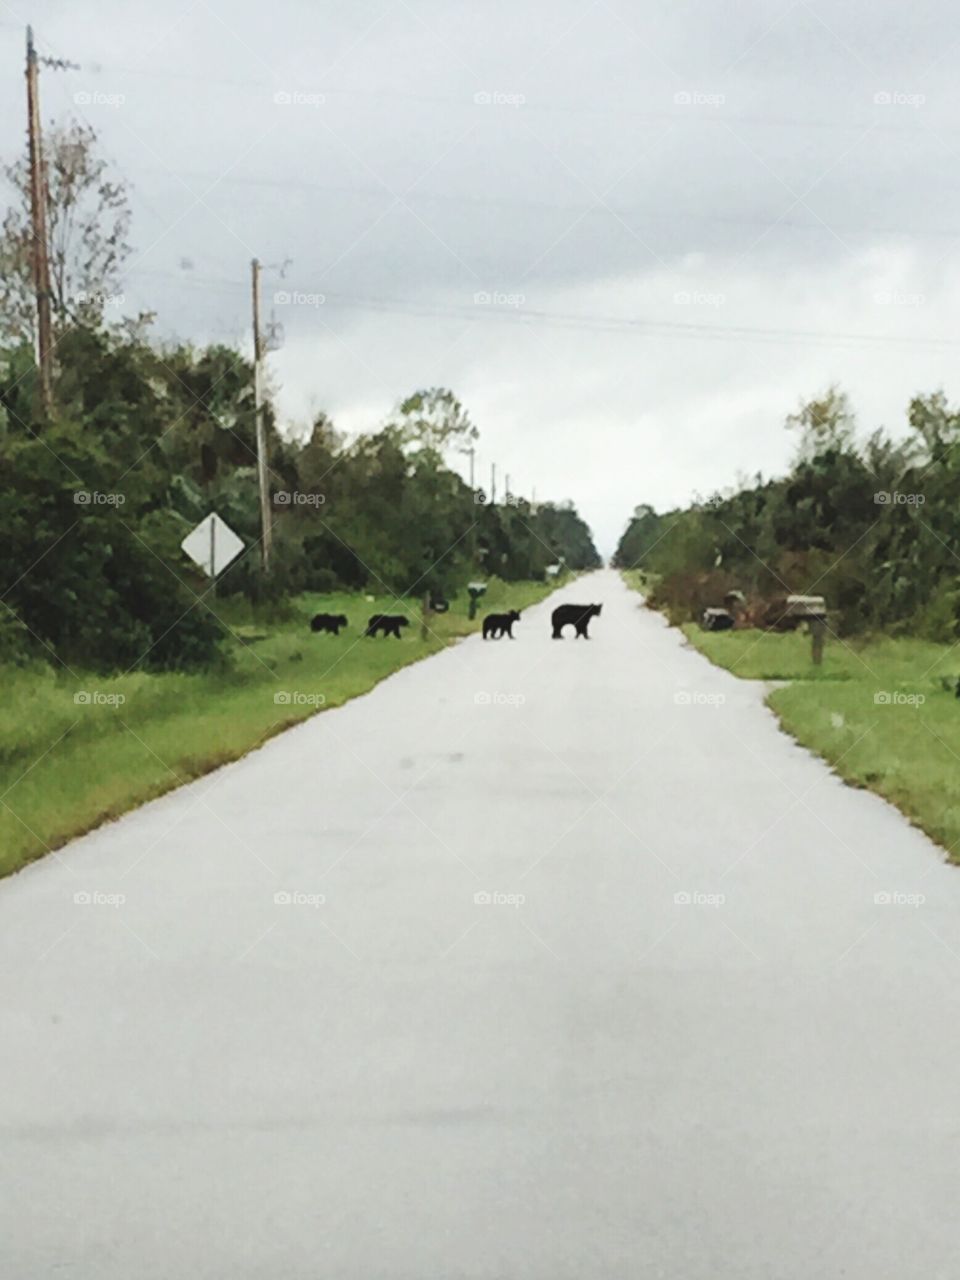 Bears Bears Bears.  Momma bear with her babies.  On the prowl.  Orange Tree Florida 